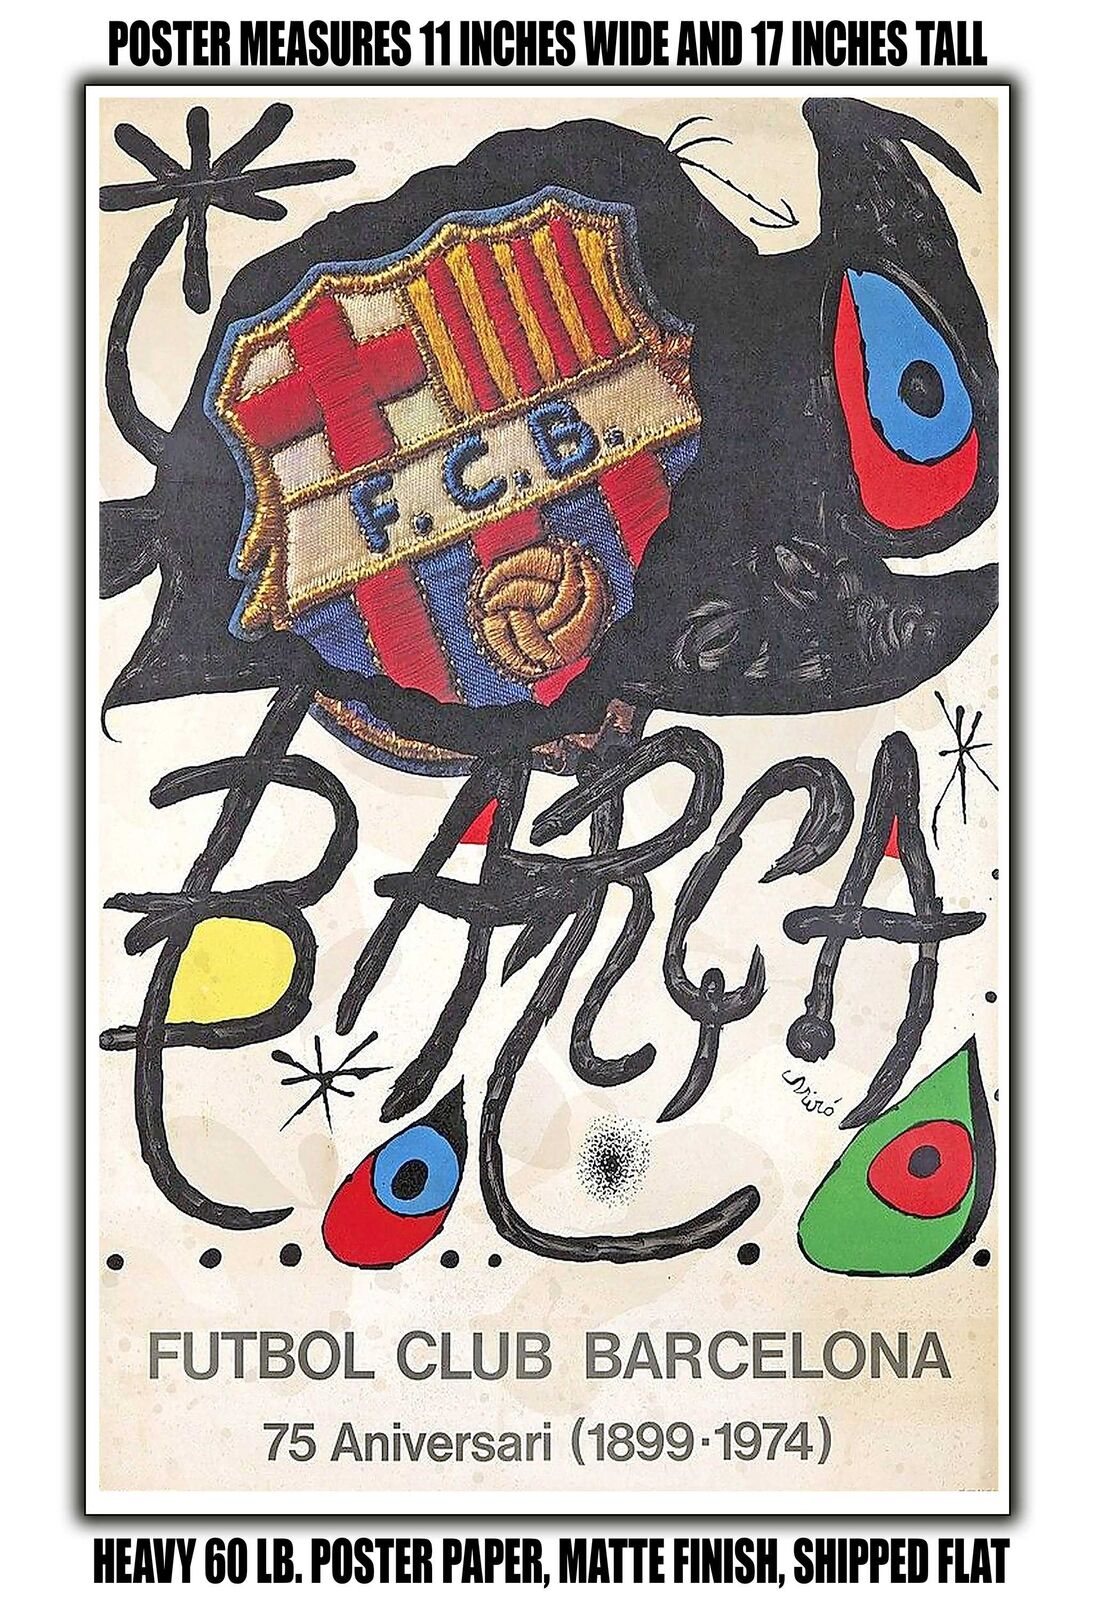 11x17 POSTER - 1974 Futbol Club Barcelona 75th Anniversary 1899-1974